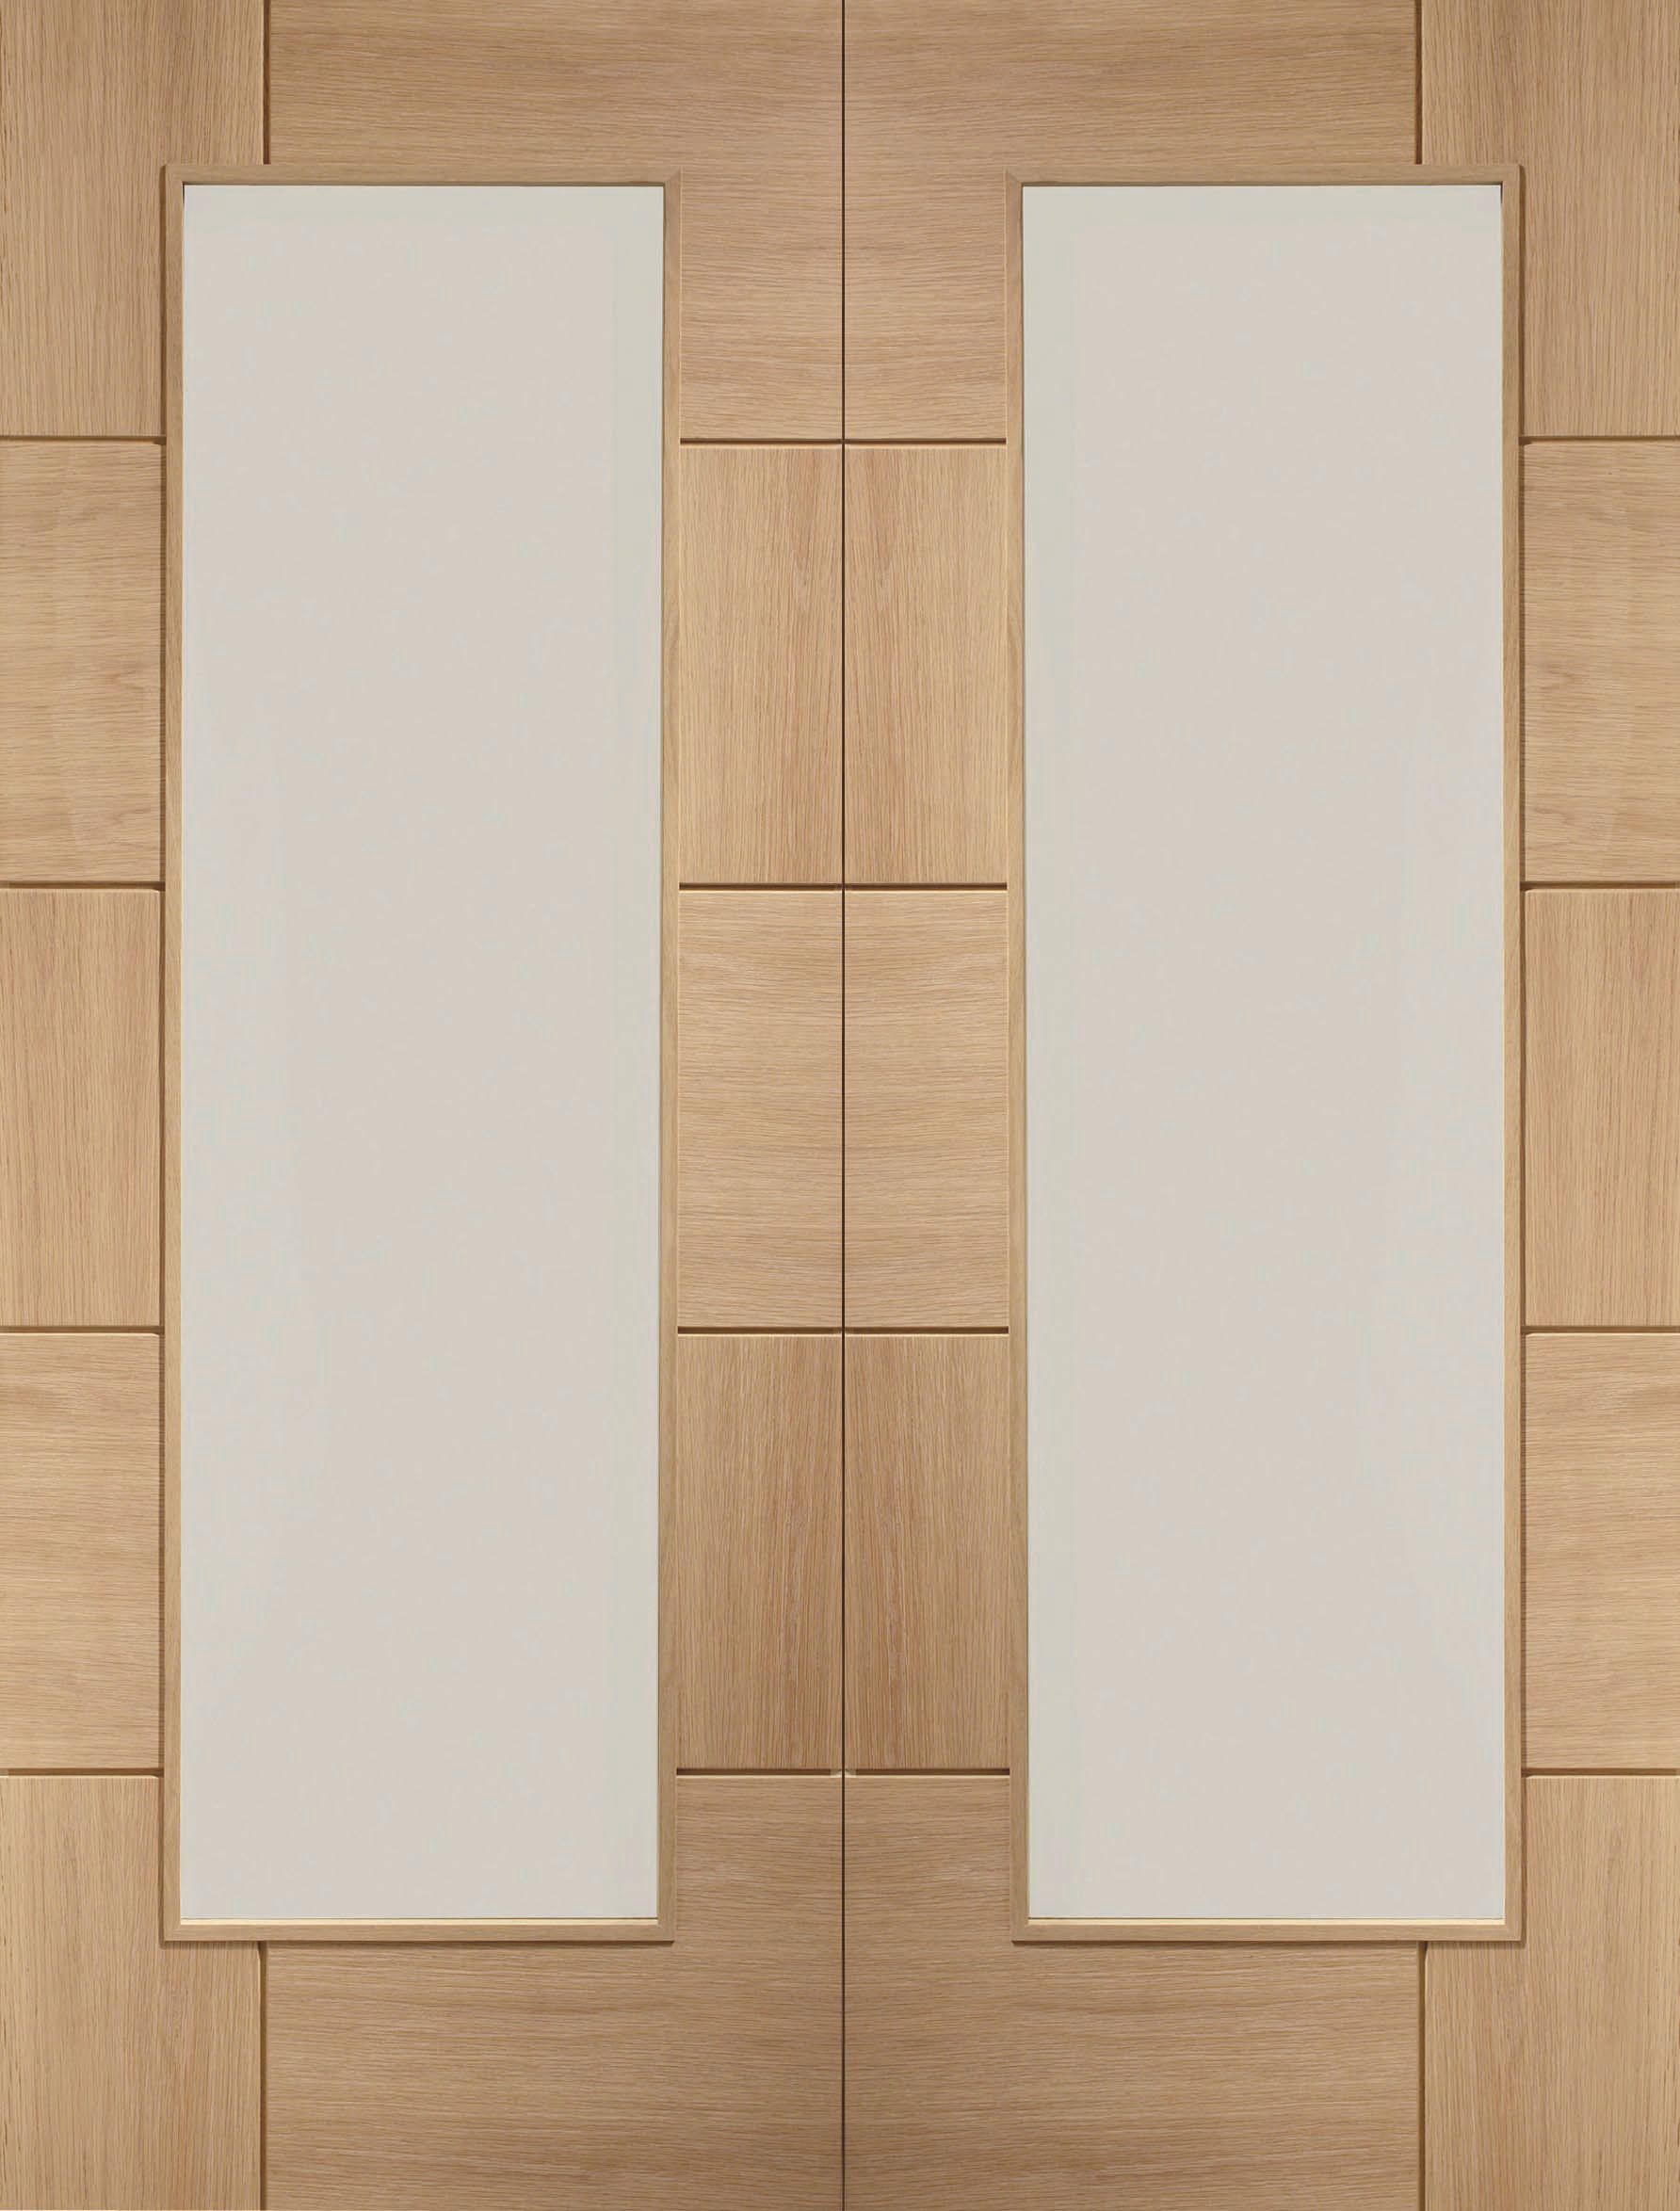 Image of XL Joinery Ravenna Fully Glazed Oak 10 Panel Door Pair - 1981 x 762mm